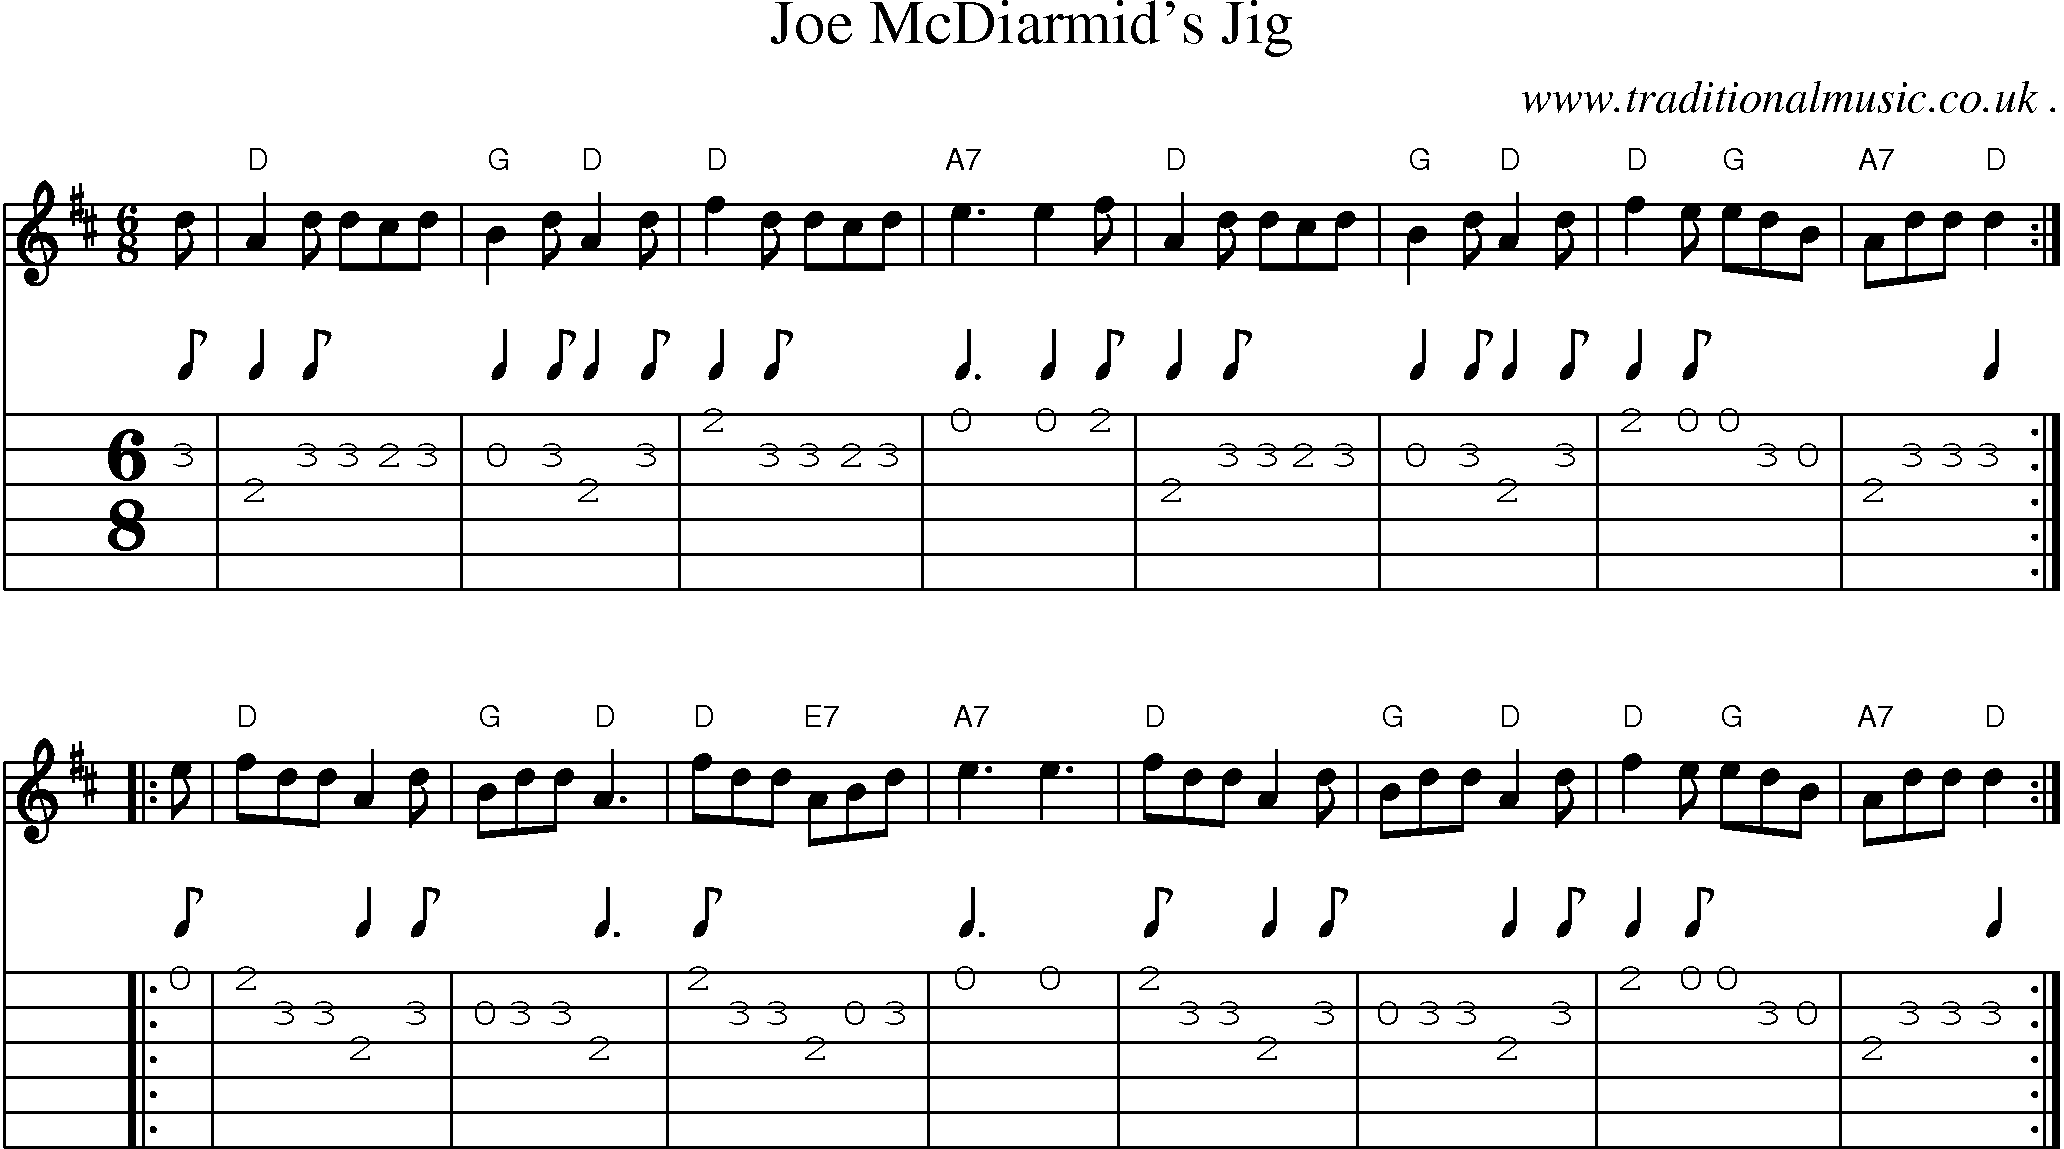 Sheet-music  score, Chords and Guitar Tabs for Joe Mcdiarmids Jig